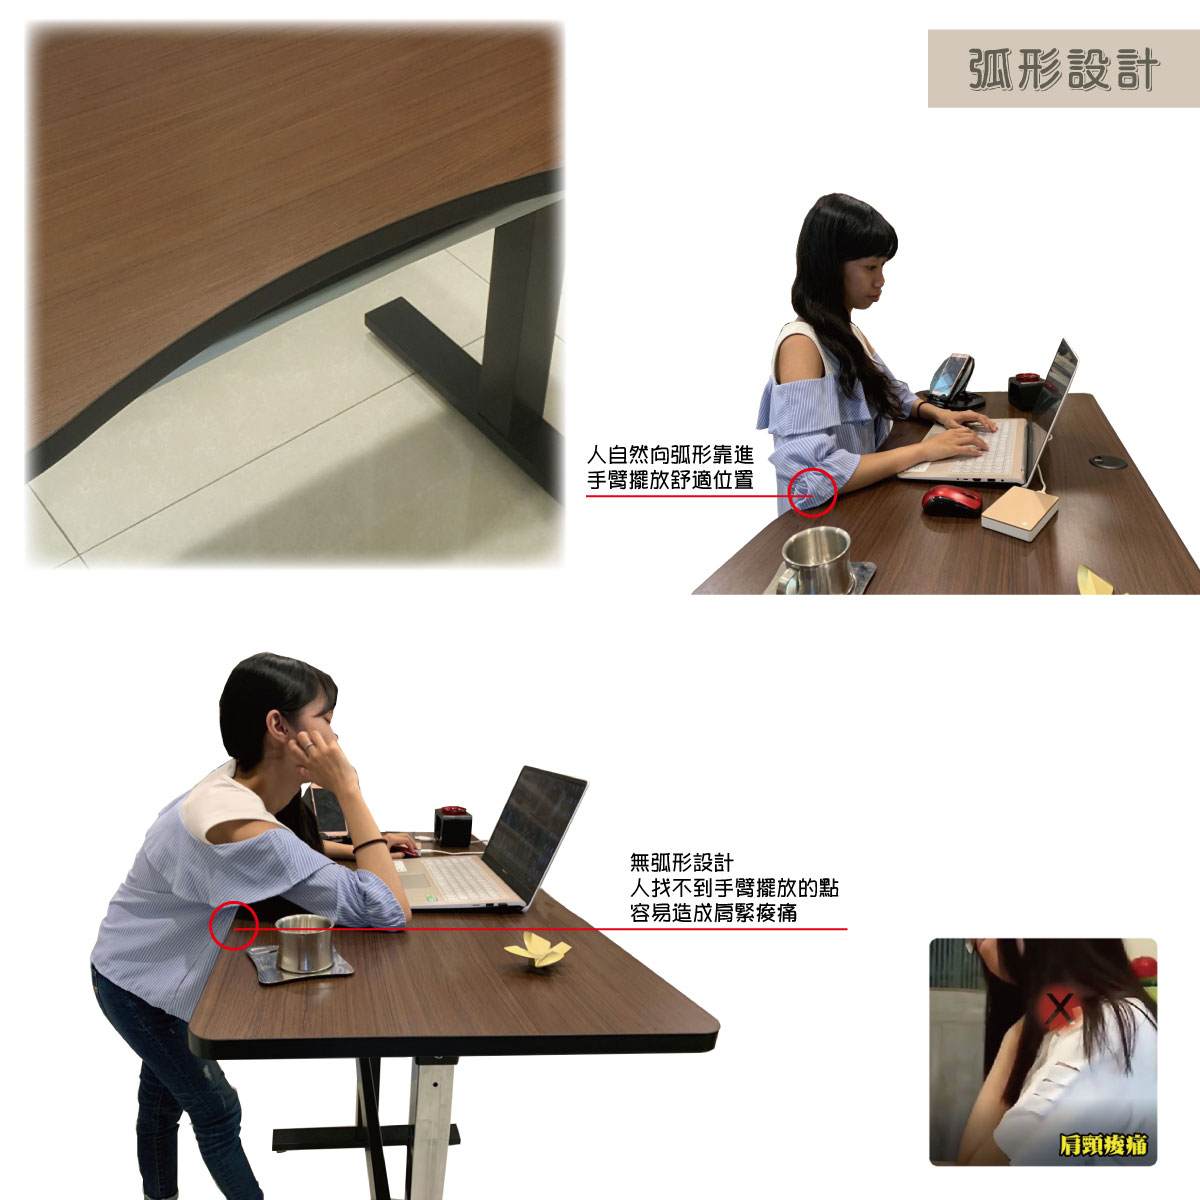 AP1專業工作升降桌有無弧形設計比較說明